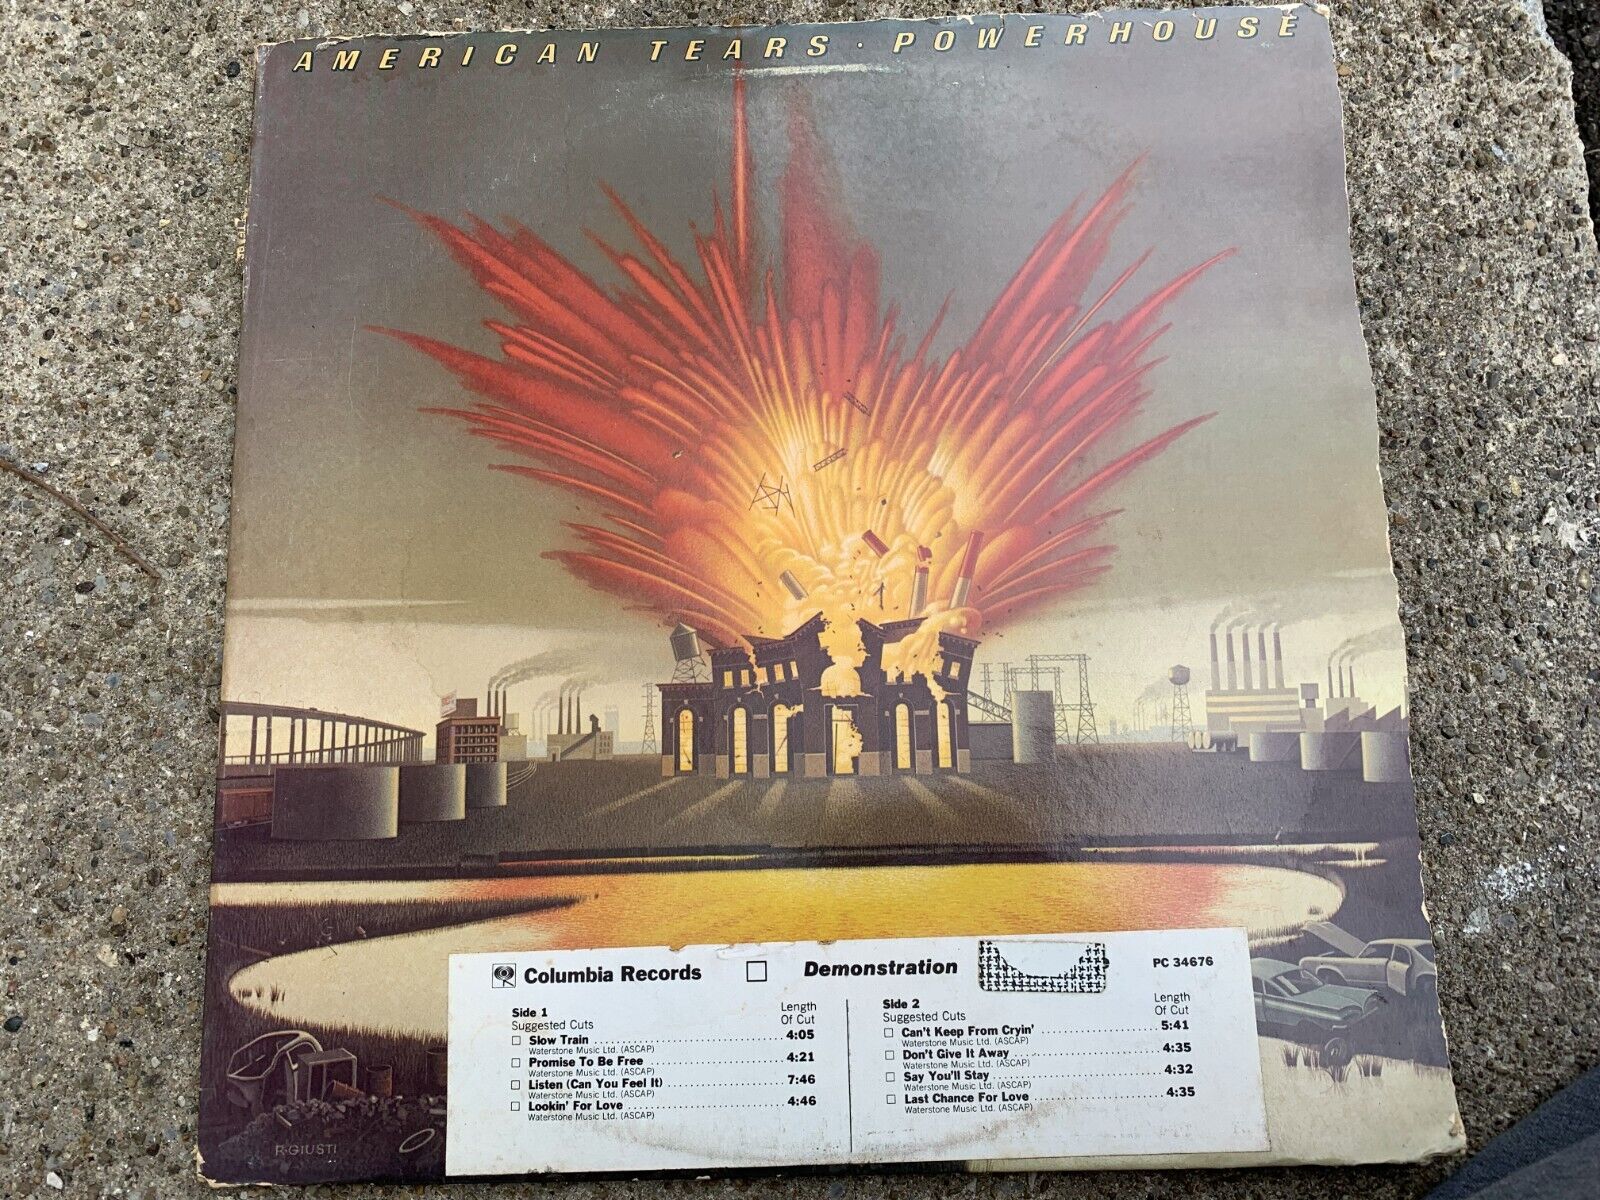 American Tears - Powerhouse - Columbia 1977 PC 34676 Rock LP Album Vinyl - VG